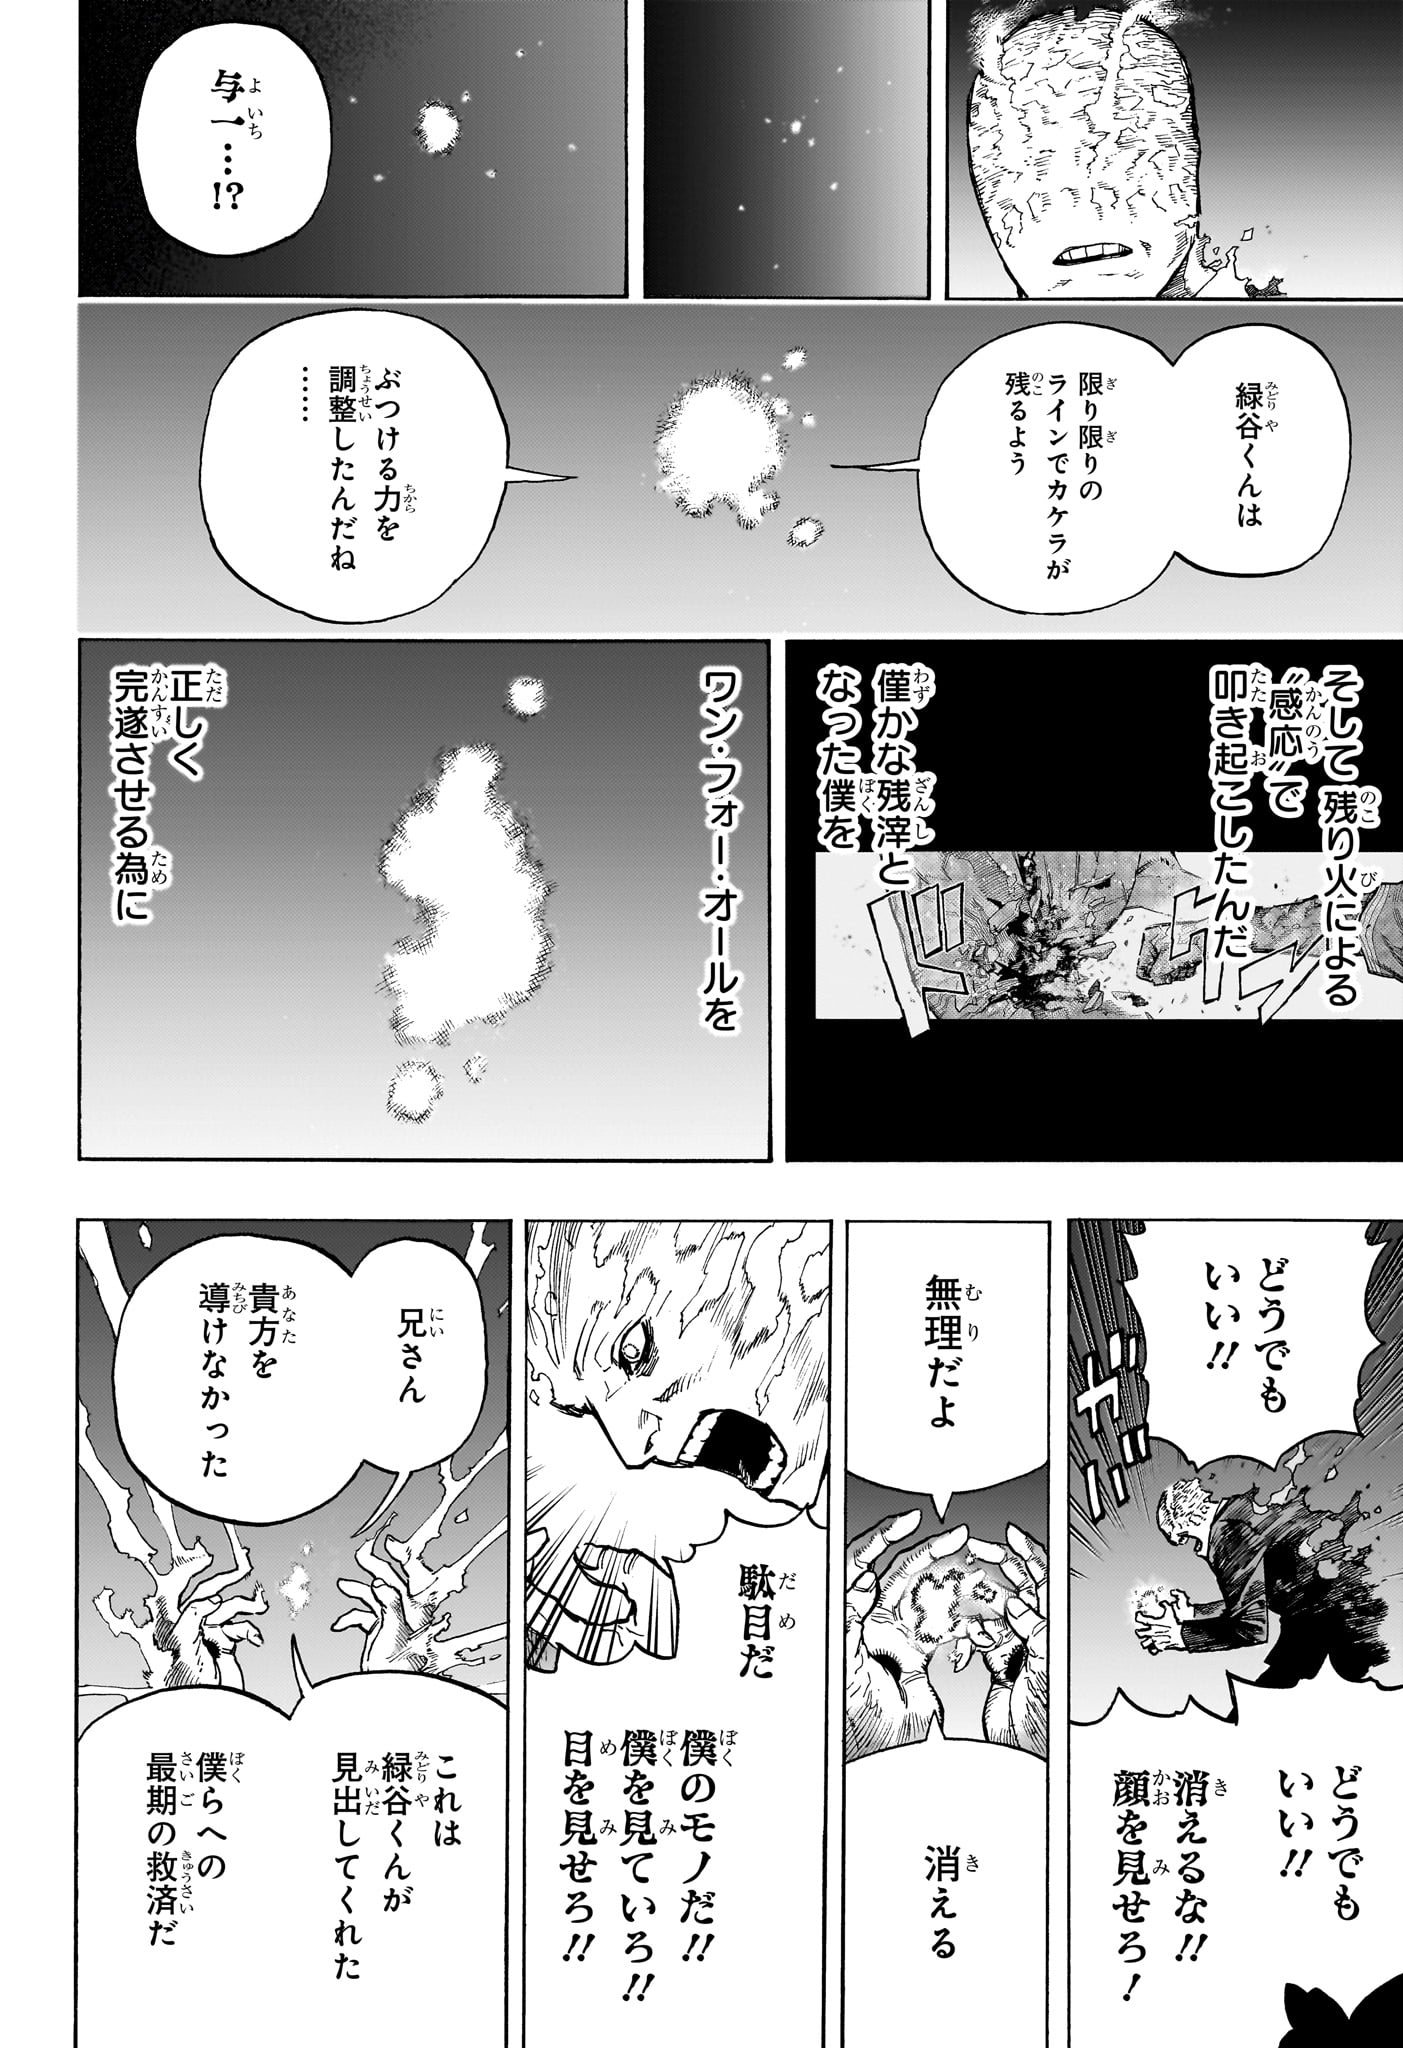 Boku no Hero Academia - Chapter 423 - Page 10